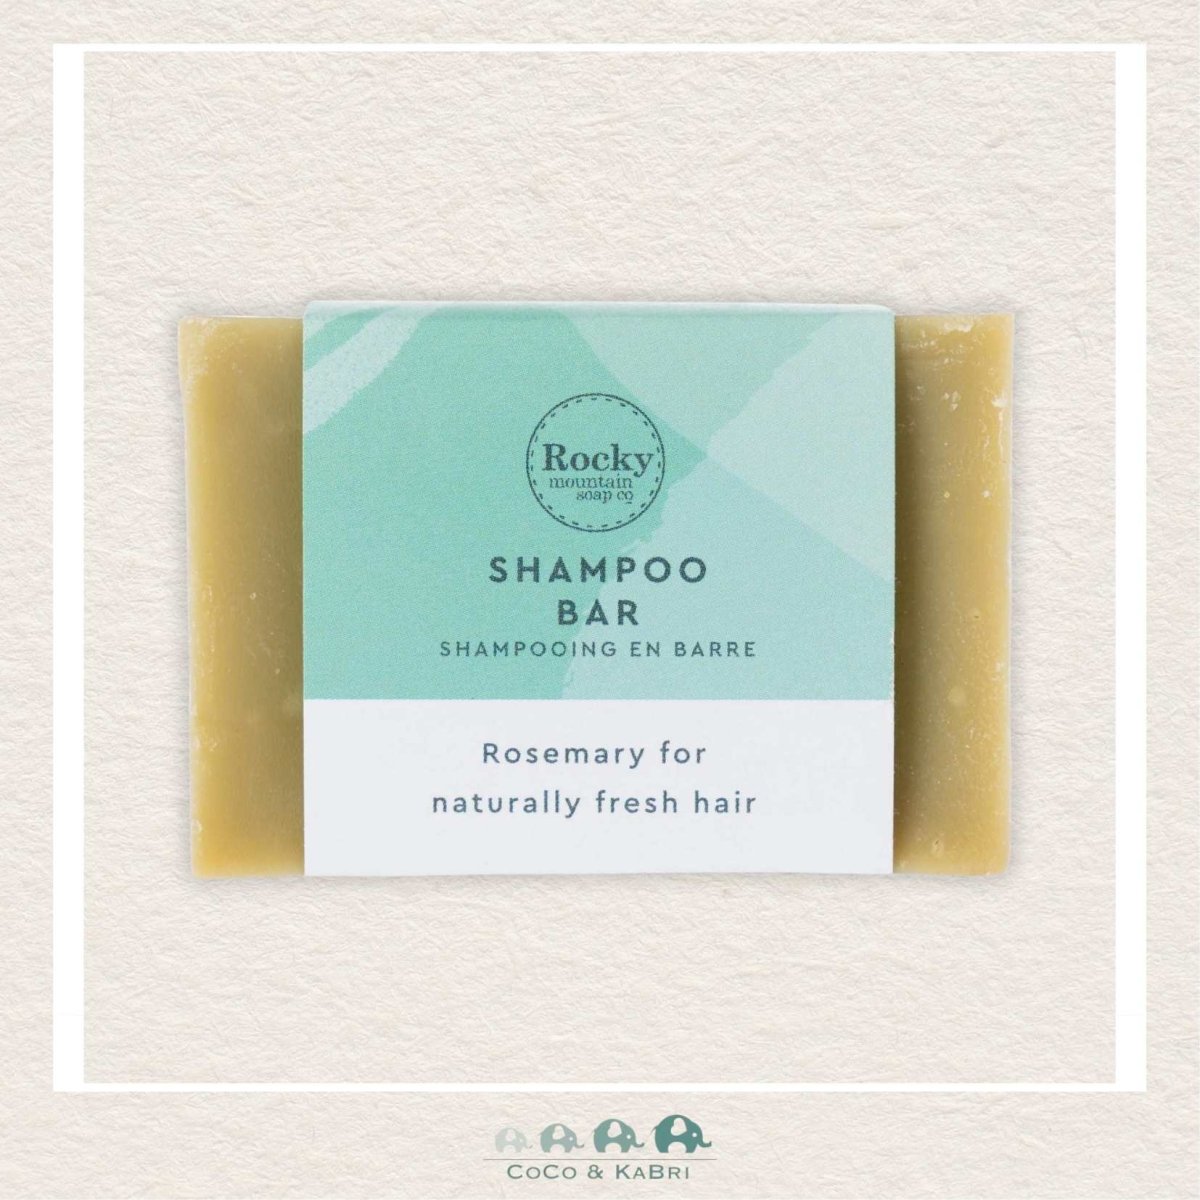 Rocky Mountain Soap Co.: Shampoo Bar